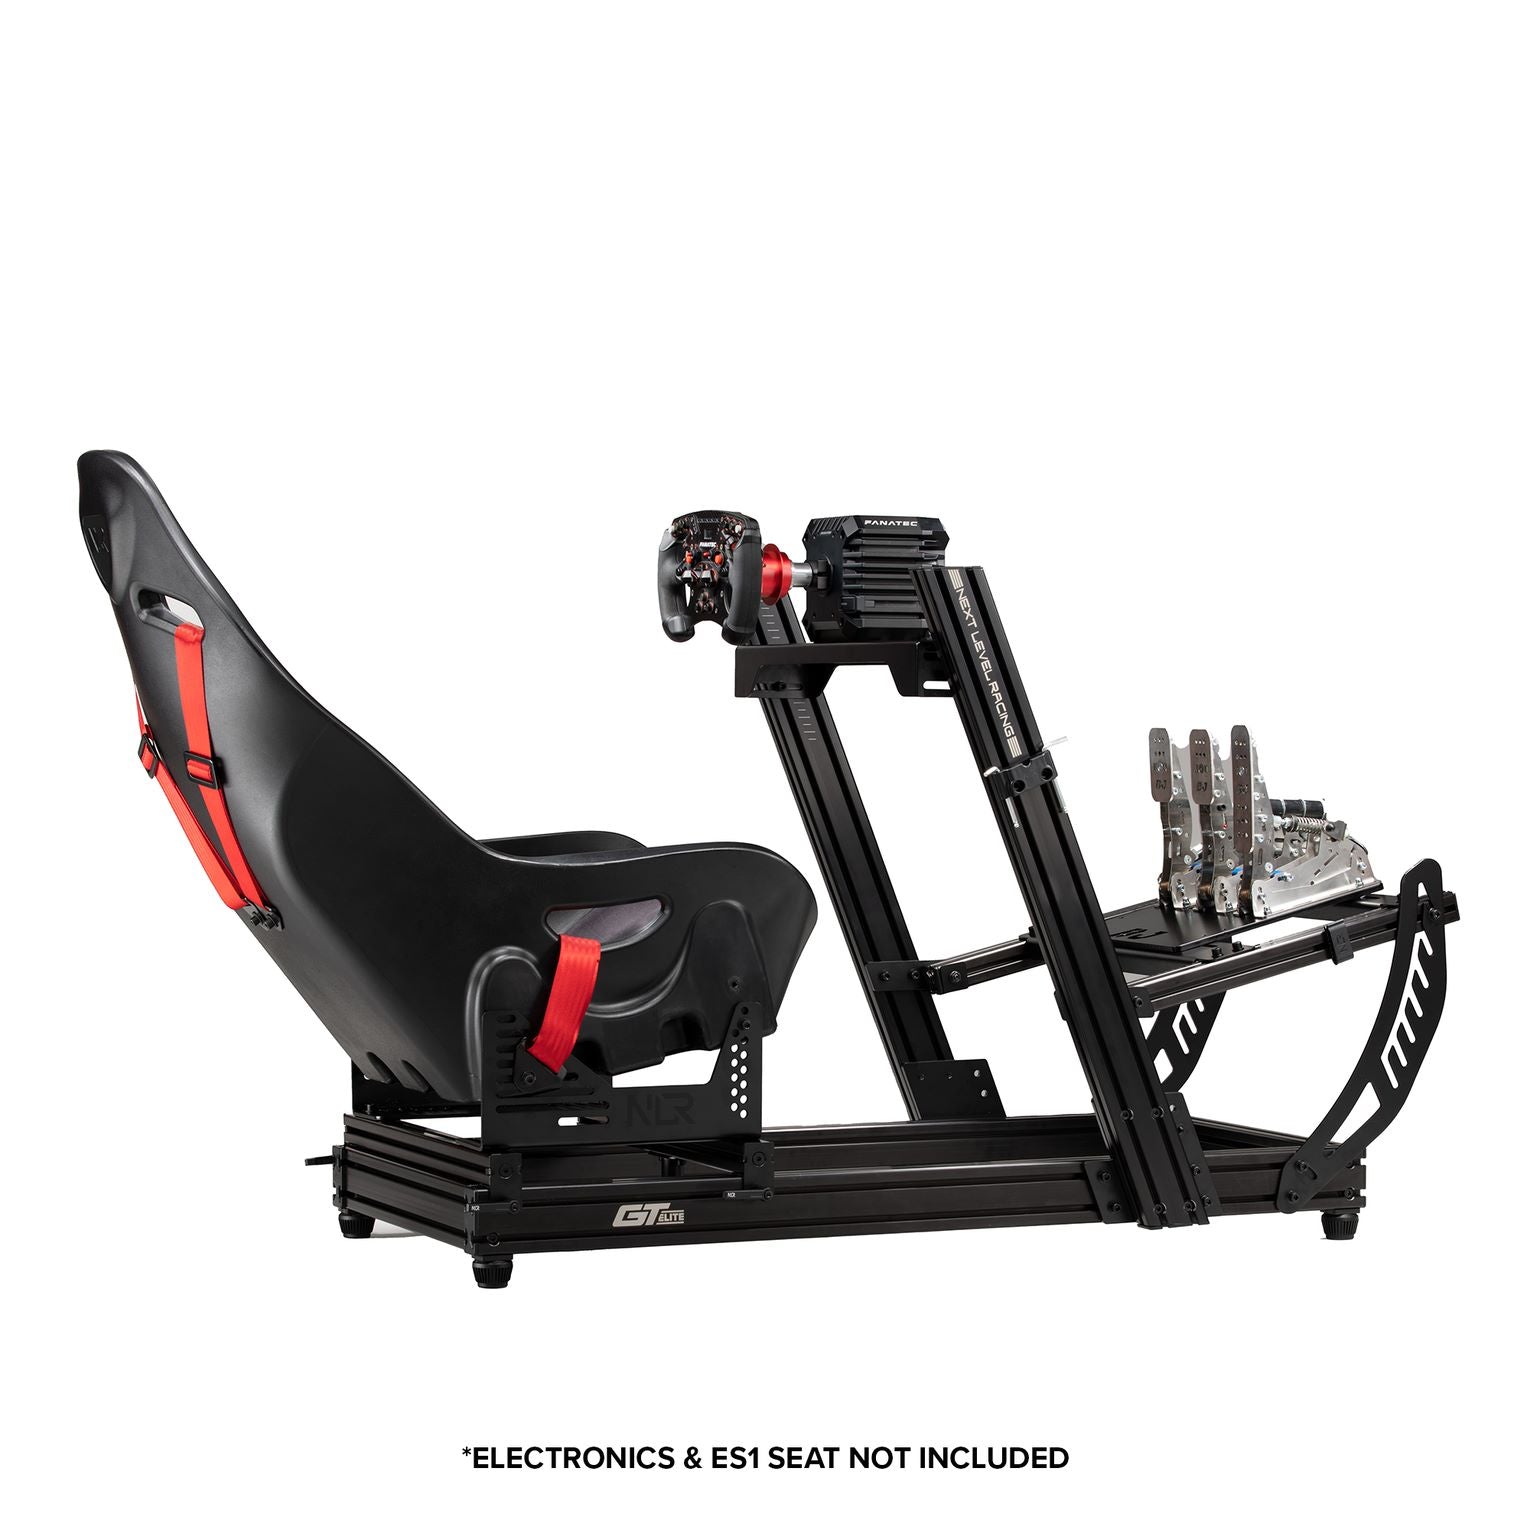 Next Level Racing F-GTElite Lite Racing Simulator Cockpit- Wheel Plate Edition